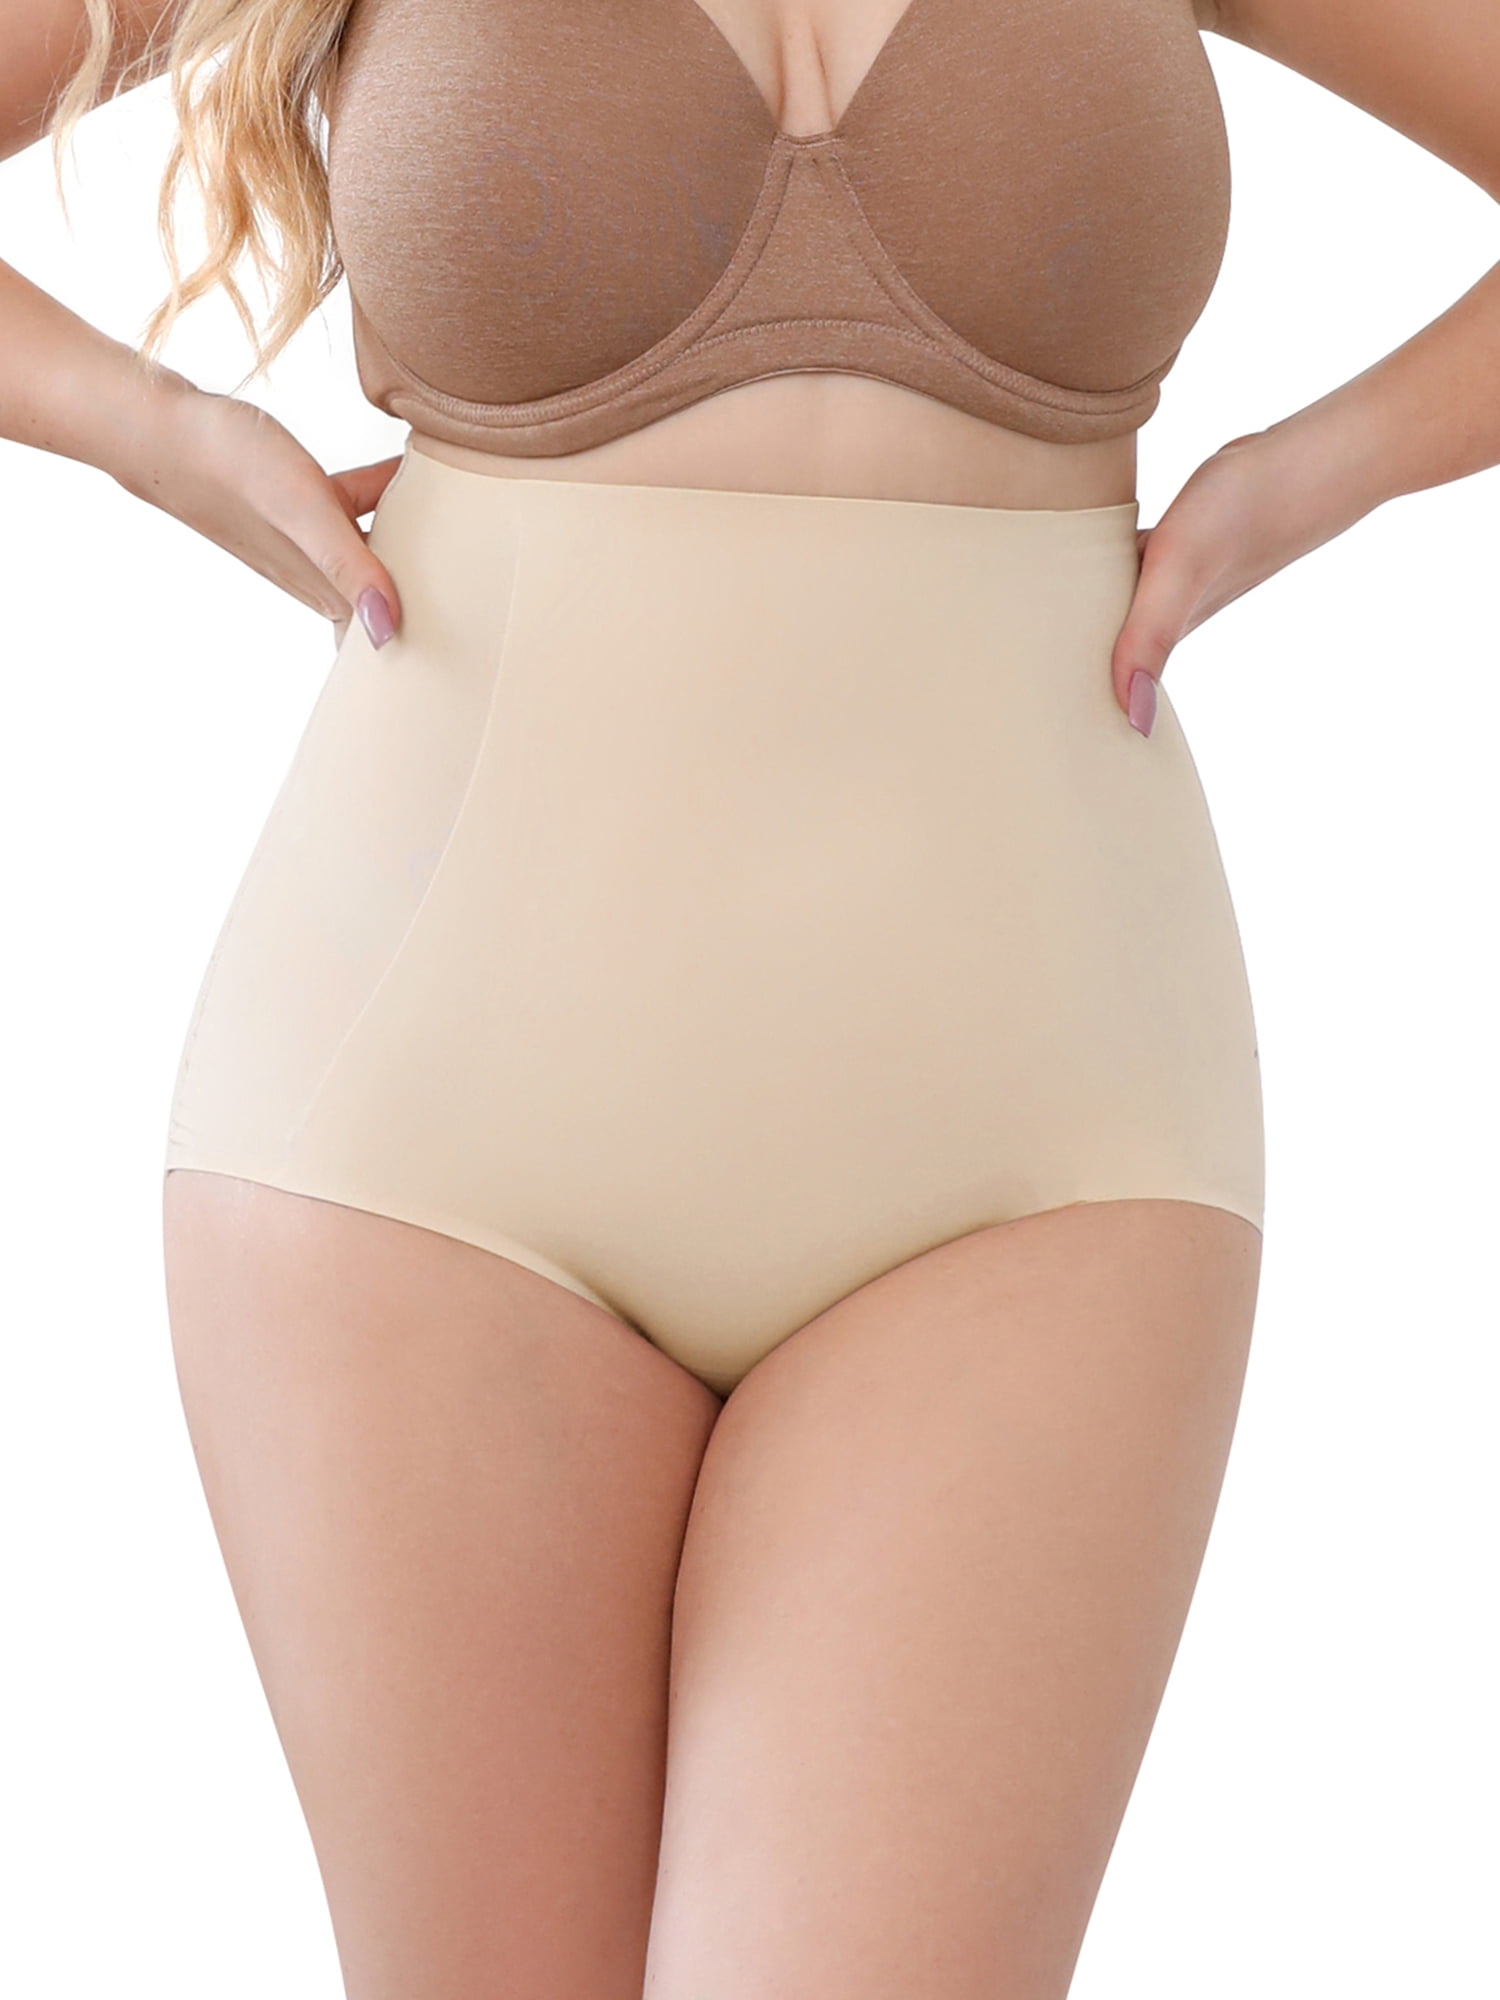 DODOING Women's Butt Lifting Panties High-Waist Seamless Body Shaper Briefs Firm  Tummy Control Slimming Shapewear Panties Girdle Underwear 